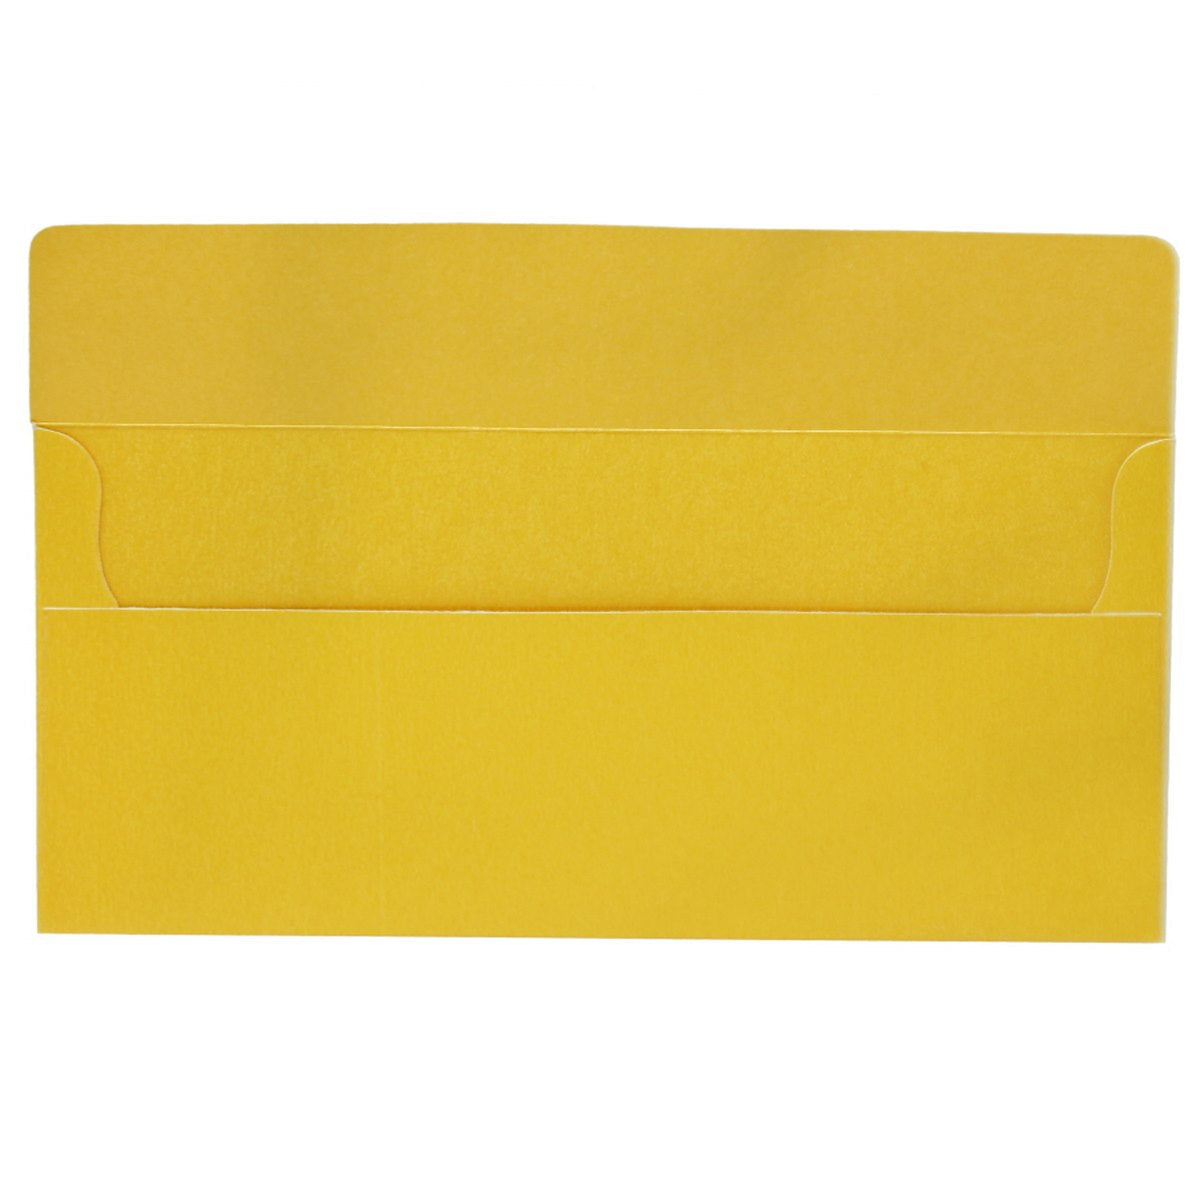 jags-mumbai Envelopes Yellow Envelopes With Fagrance